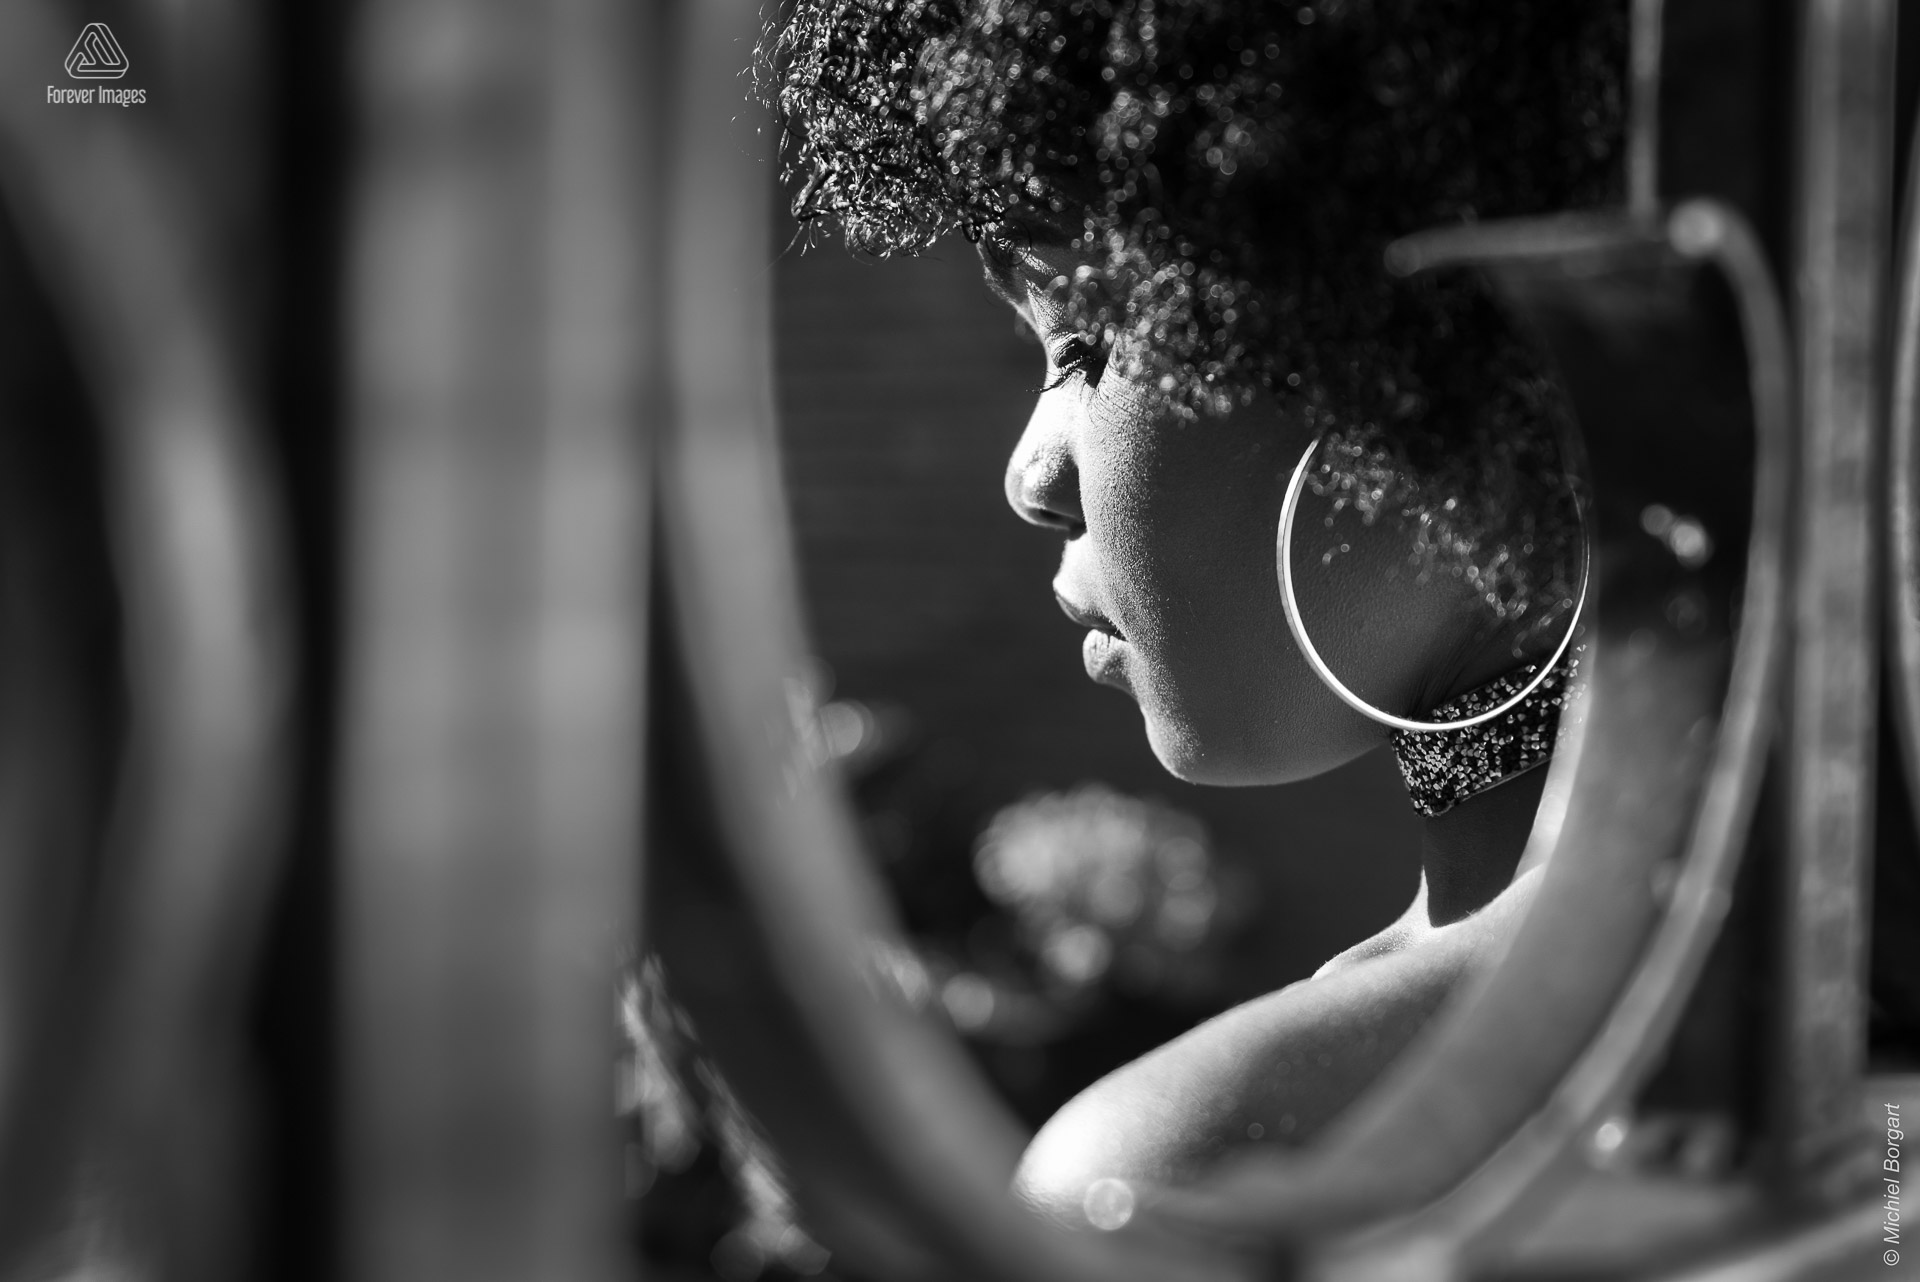 Portretfoto zwart-wit door hek | Mariangel Dolorita Haarlem | Portretfotograaf Michiel Borgart - Forever Images.